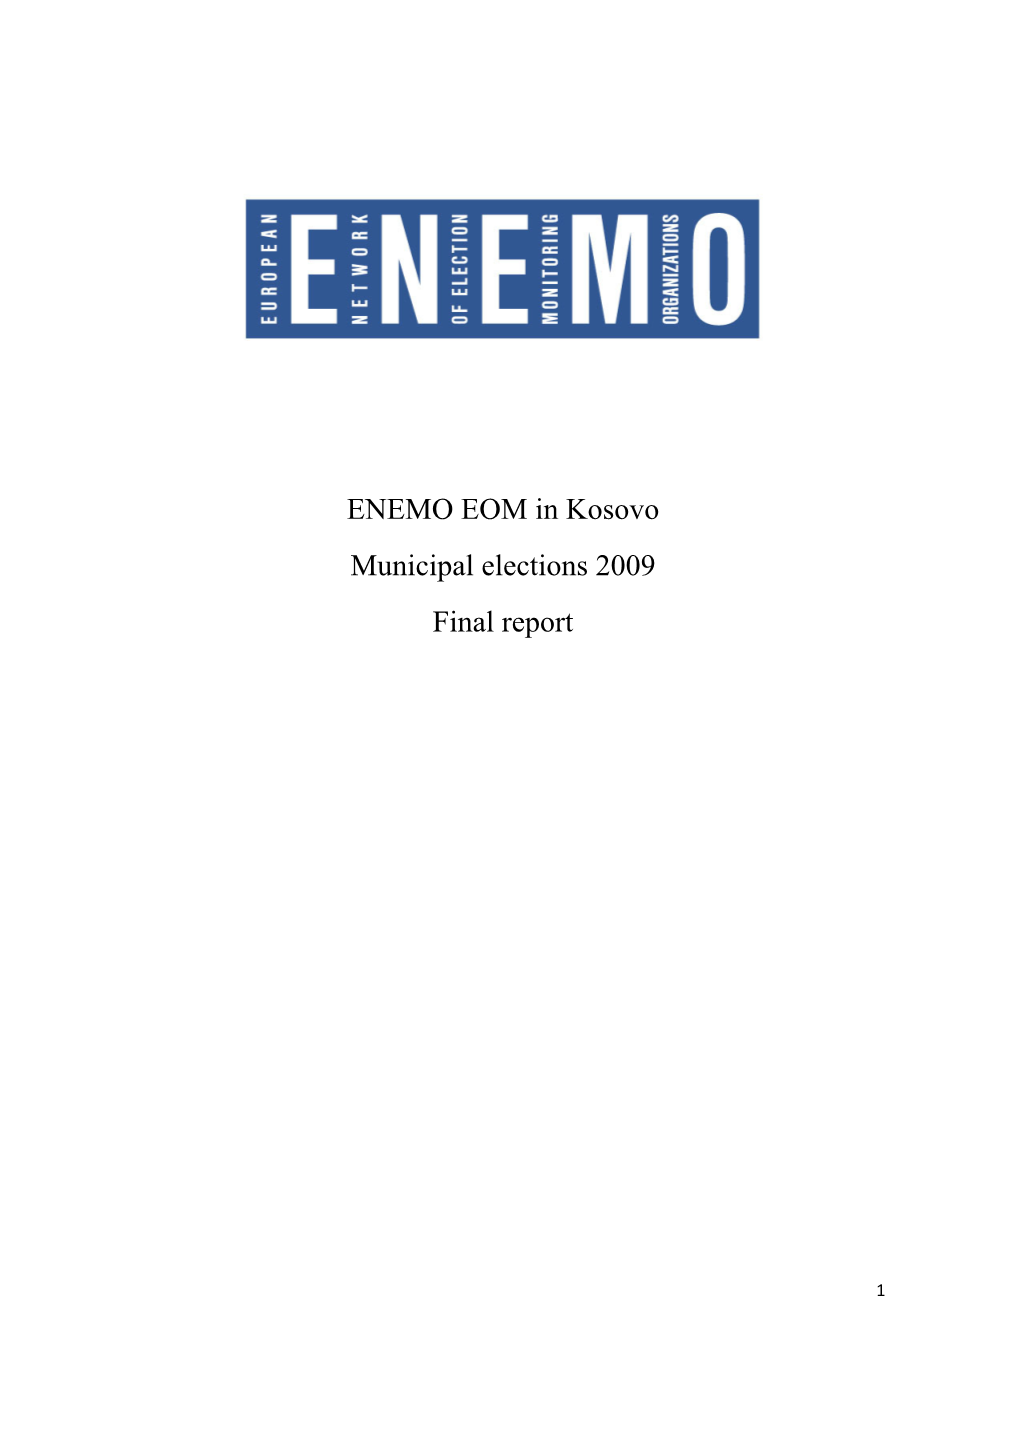 ENEMO EOM in Kosovo Municipal Elections 2009 Final Report